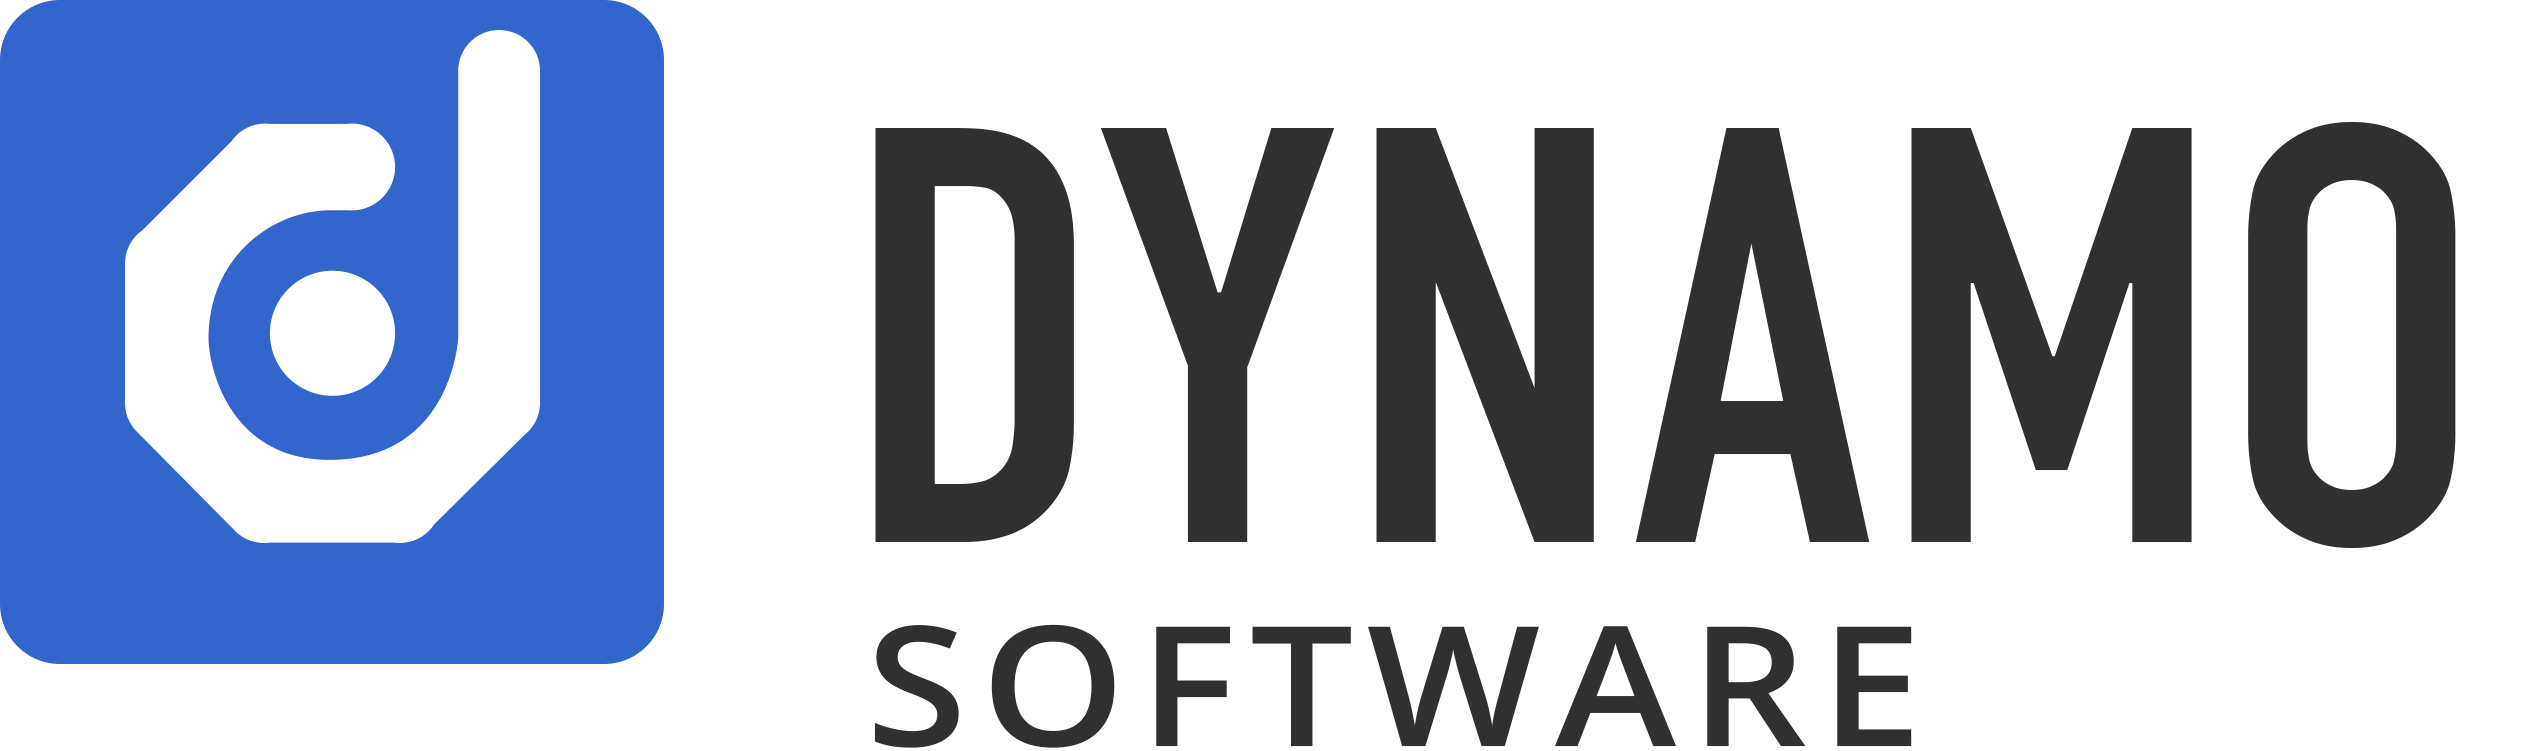 Dynamo Logo - File:Dynamo Software Corporate Logo.png - Wikimedia Commons